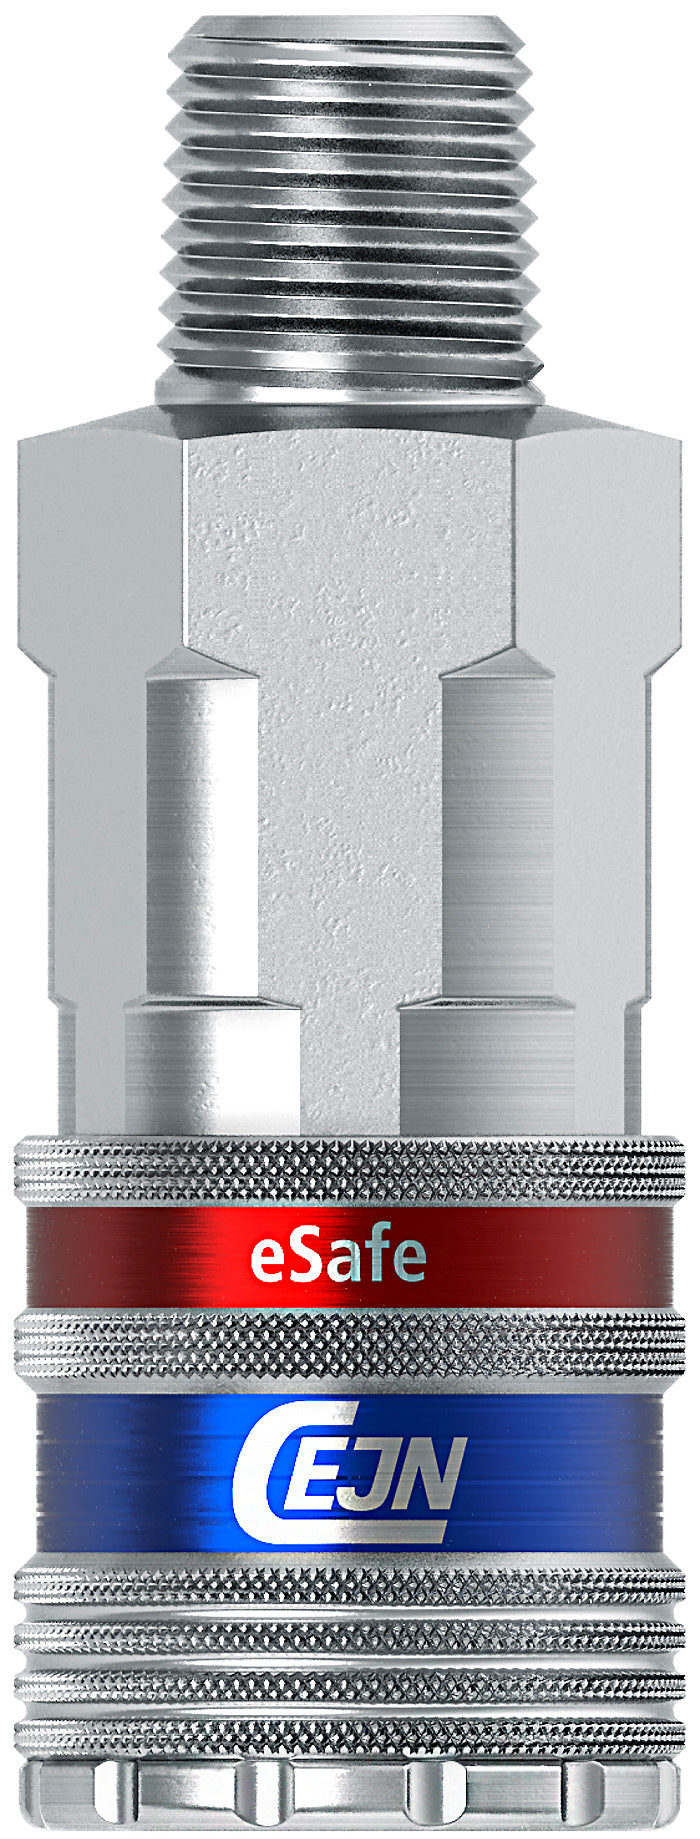 Cejn 10-310-5151 Series 310 DN 5.3 eSafe Male Thread Nipple R 1/8", 16 Bar